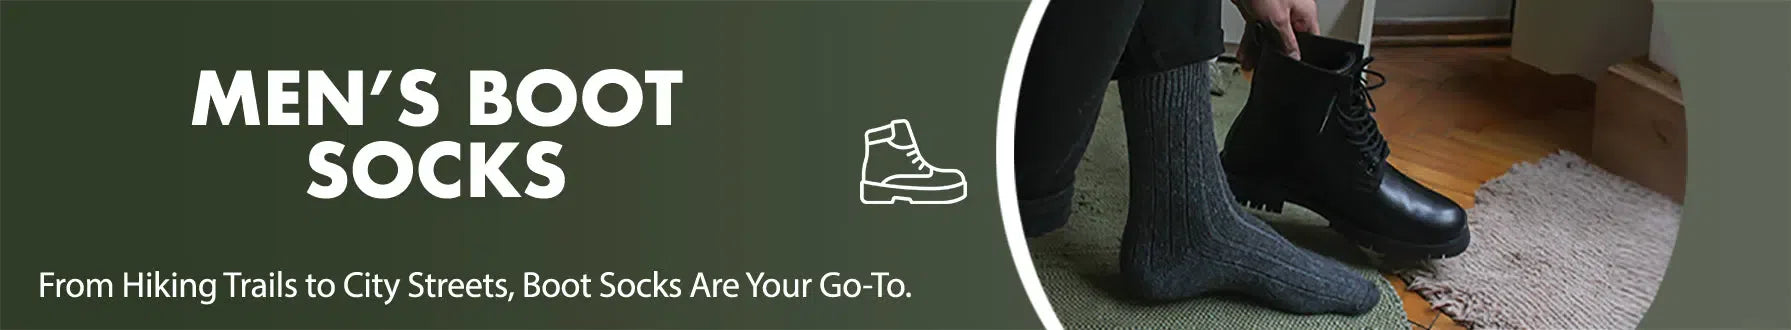 GoWith men's boot socks collection banner desktop